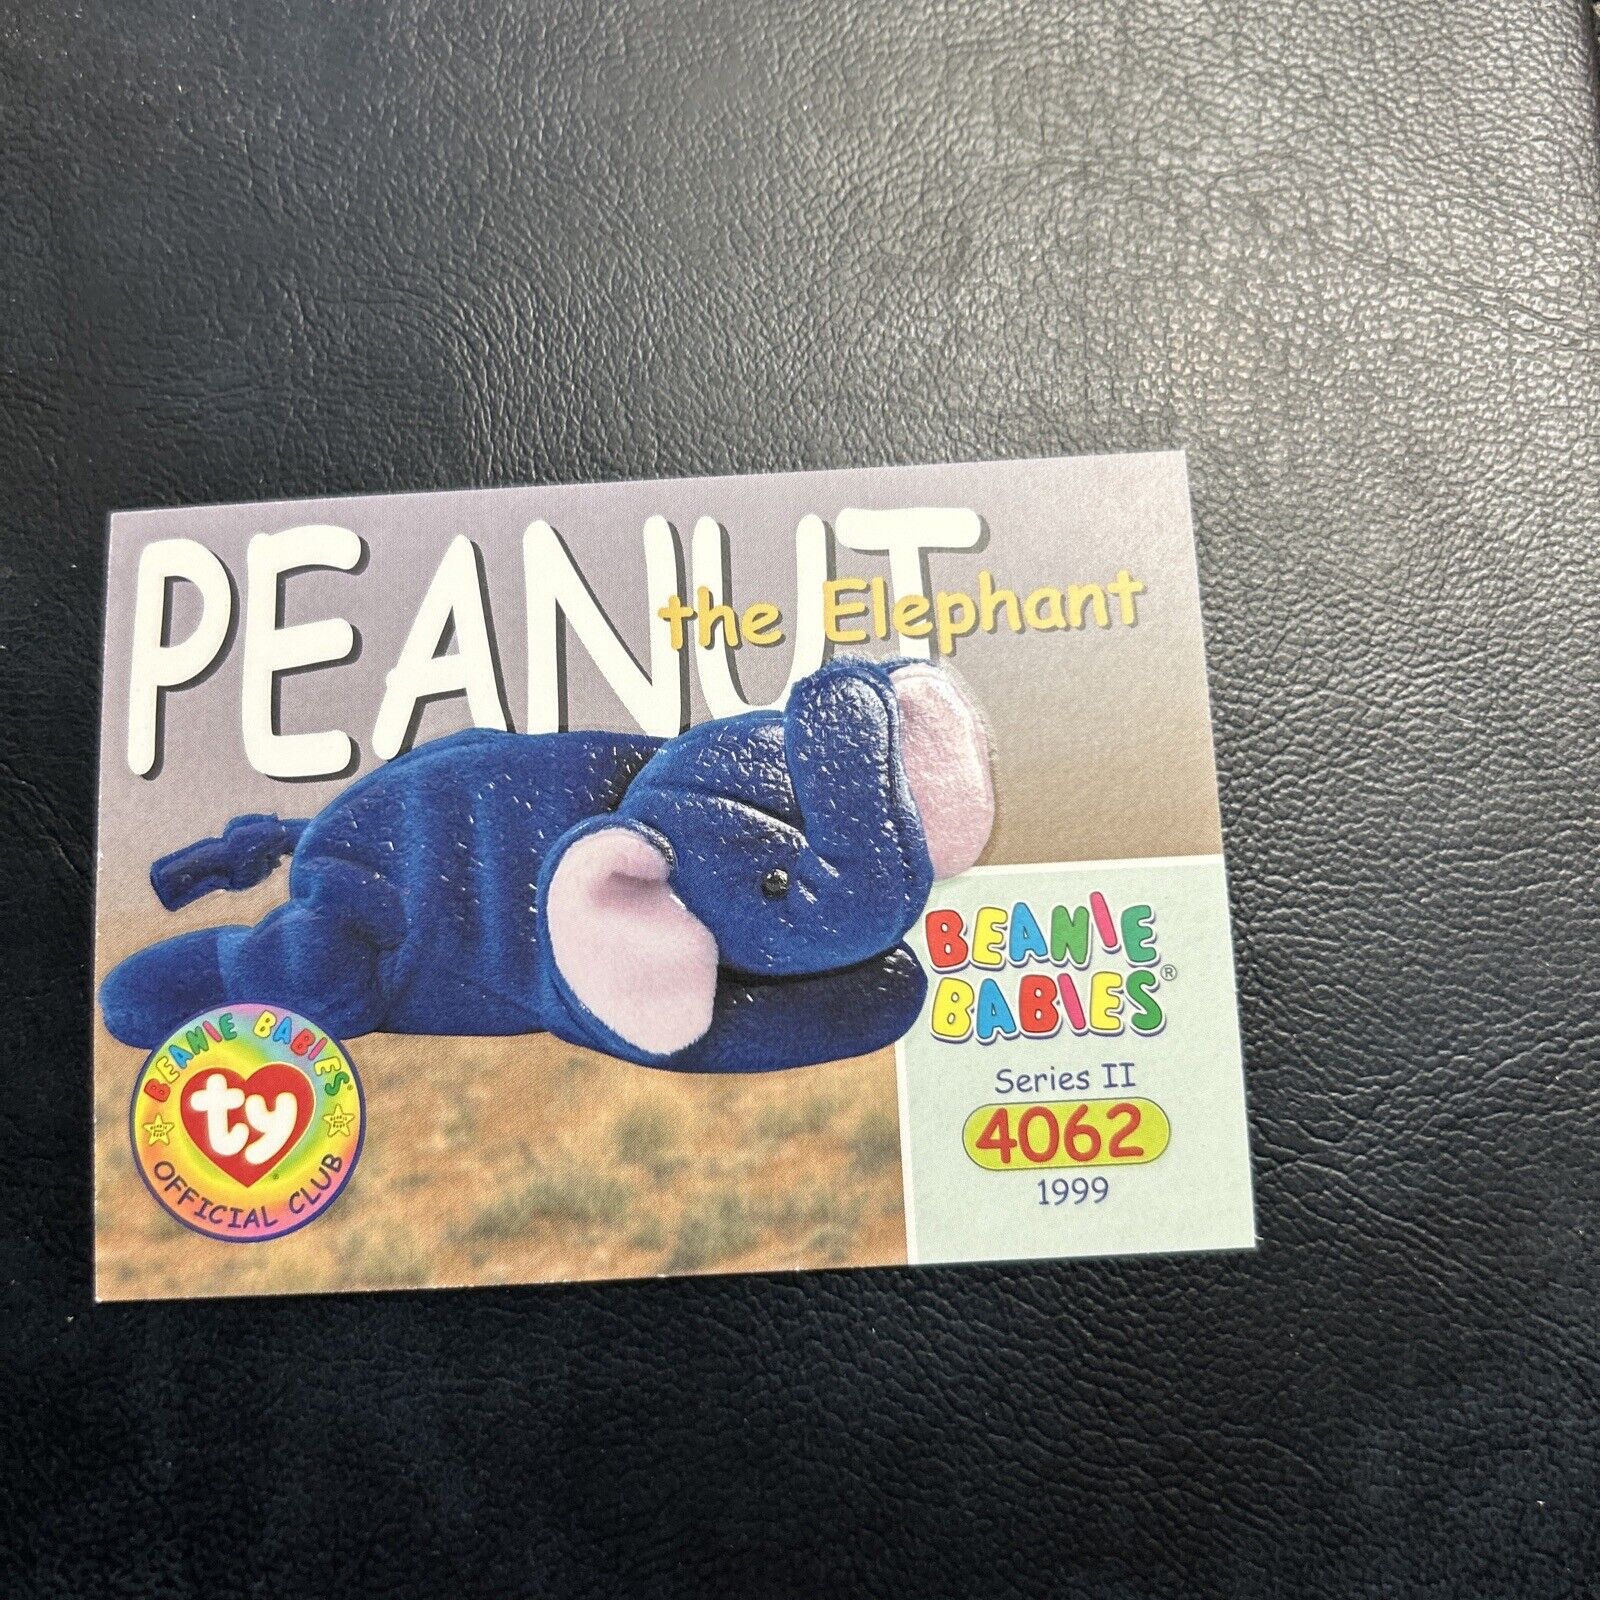 Jb20 Ty beanie babies series 2 II 1999 #206 Peanut The Elephant